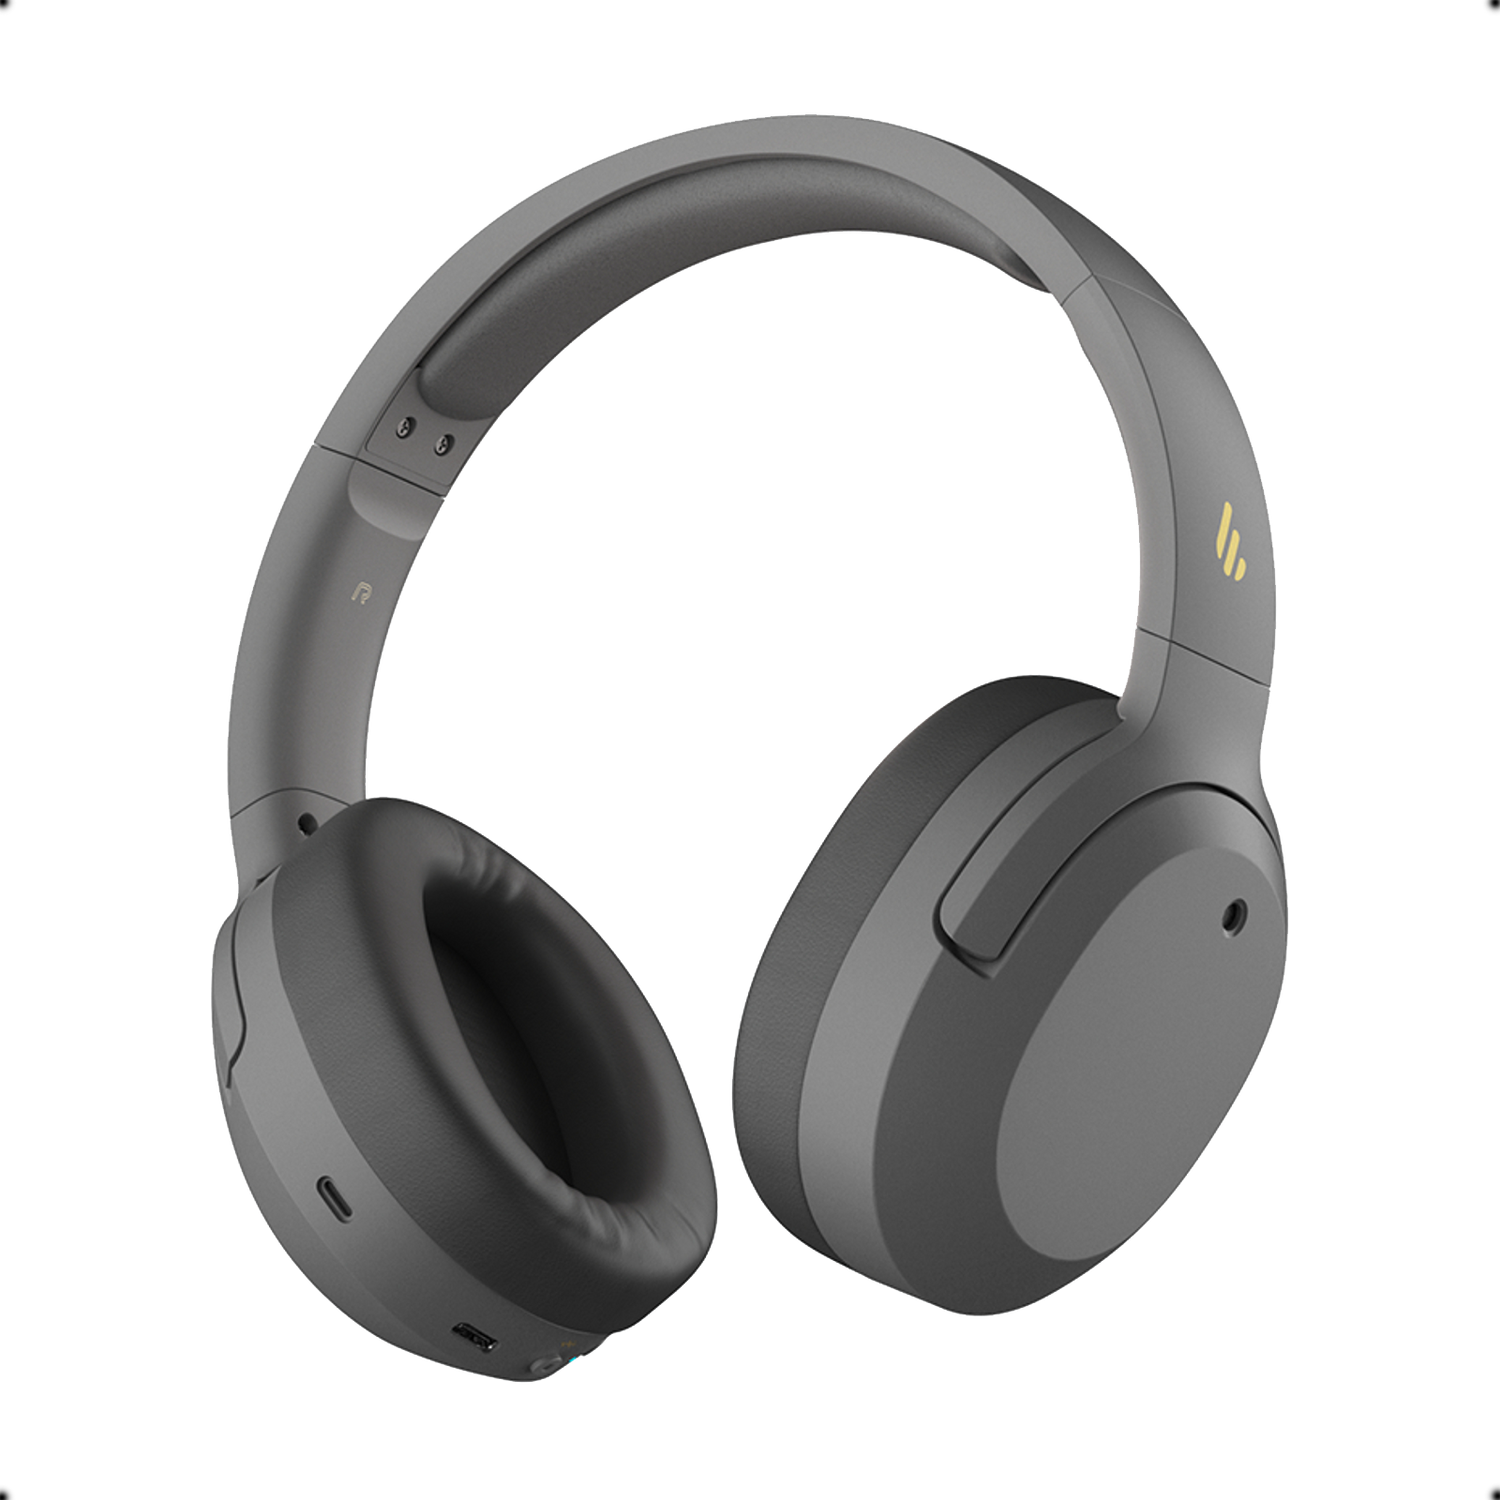 W820NB Hi-Res Audio Headphones Hybrid ANC Bluetooth Stereo Headphones